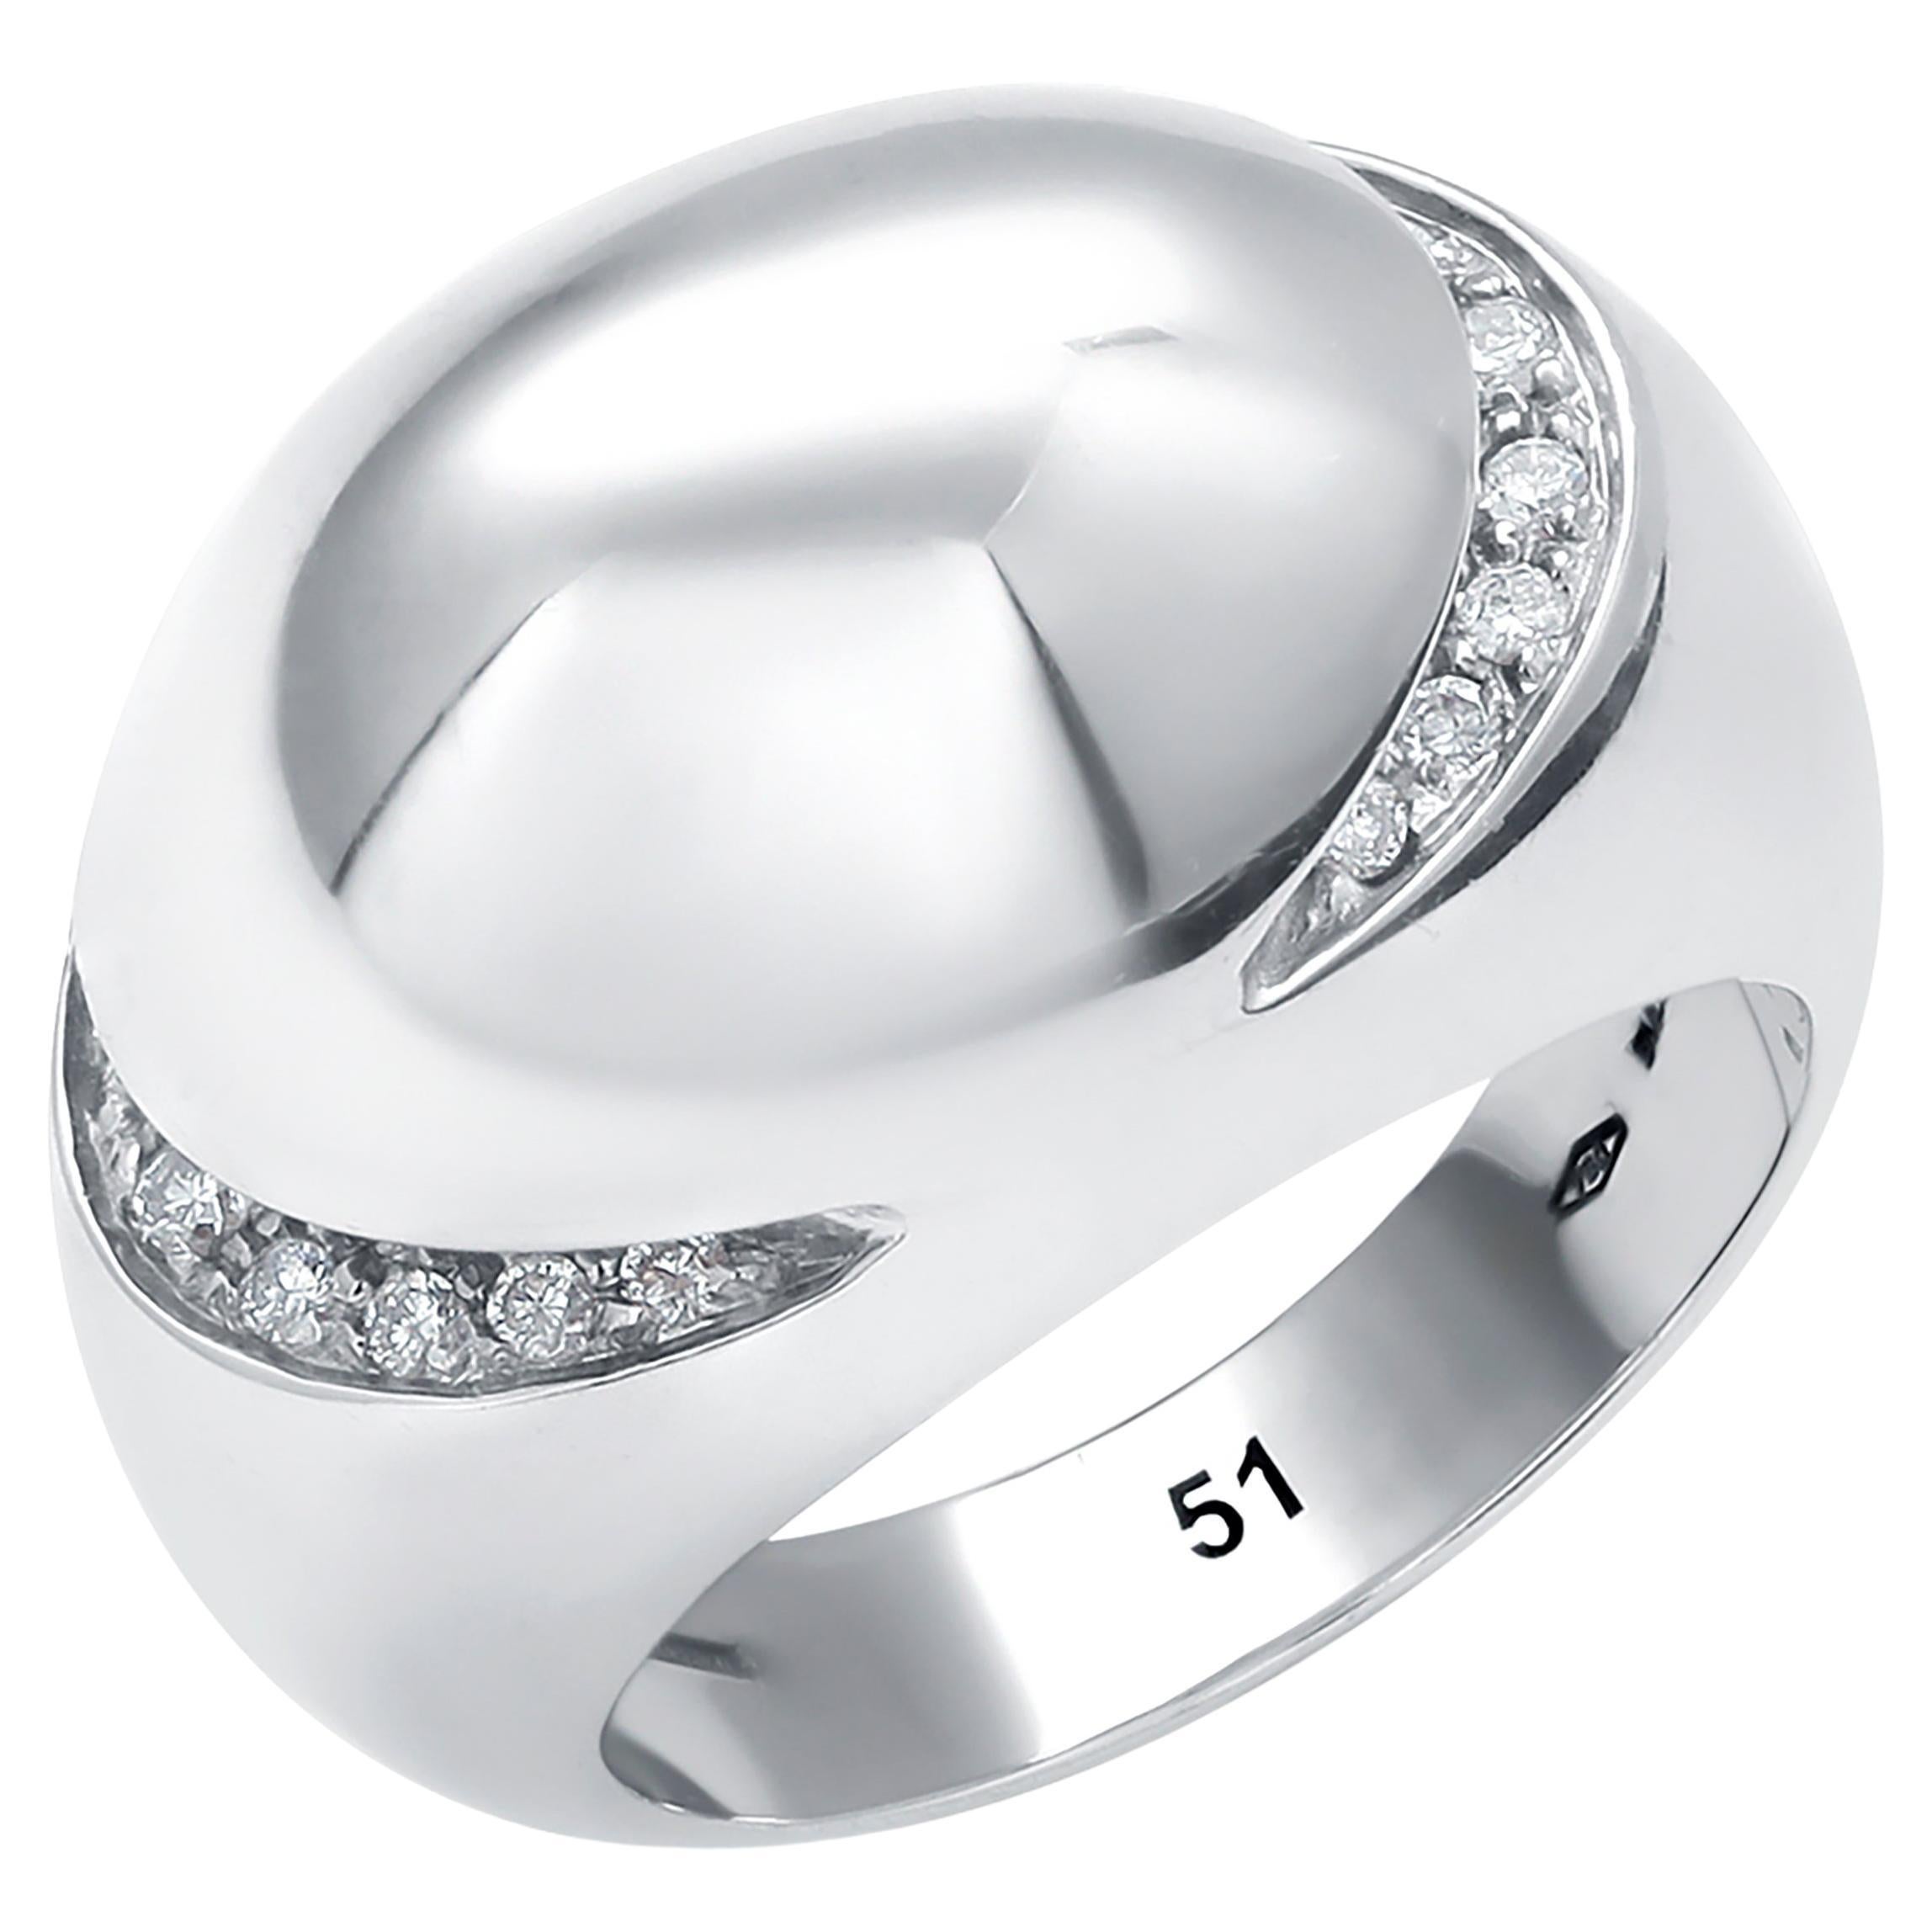 Bvlgari Eighteen Karat White Gold Dome Diamond Cocktail Ring Finger Size 5.5